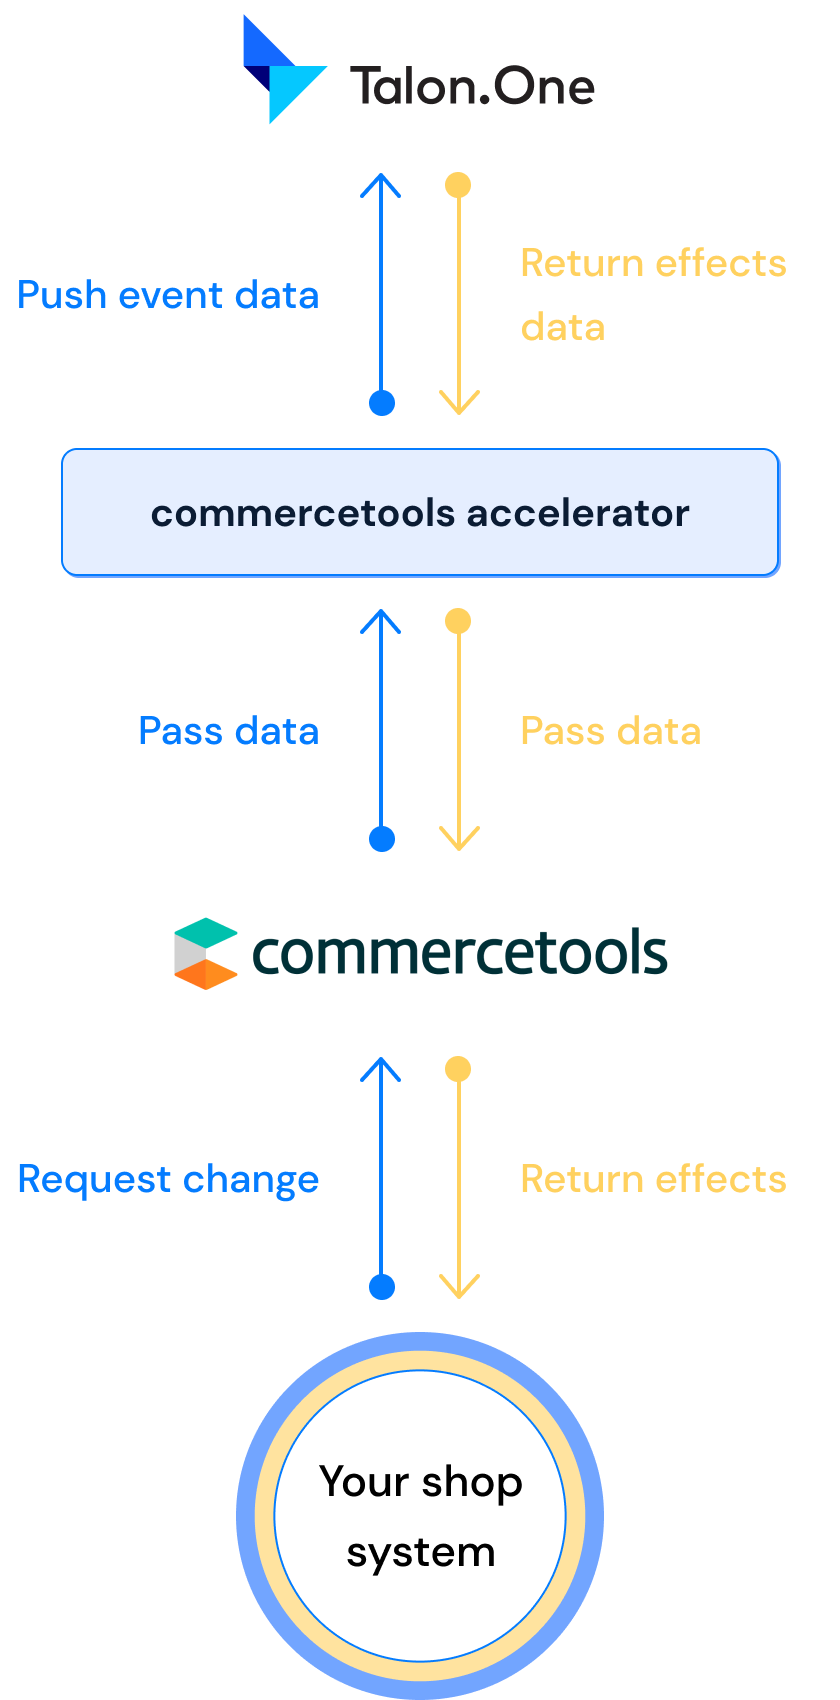 Understanding how the commercetools accelerator works.